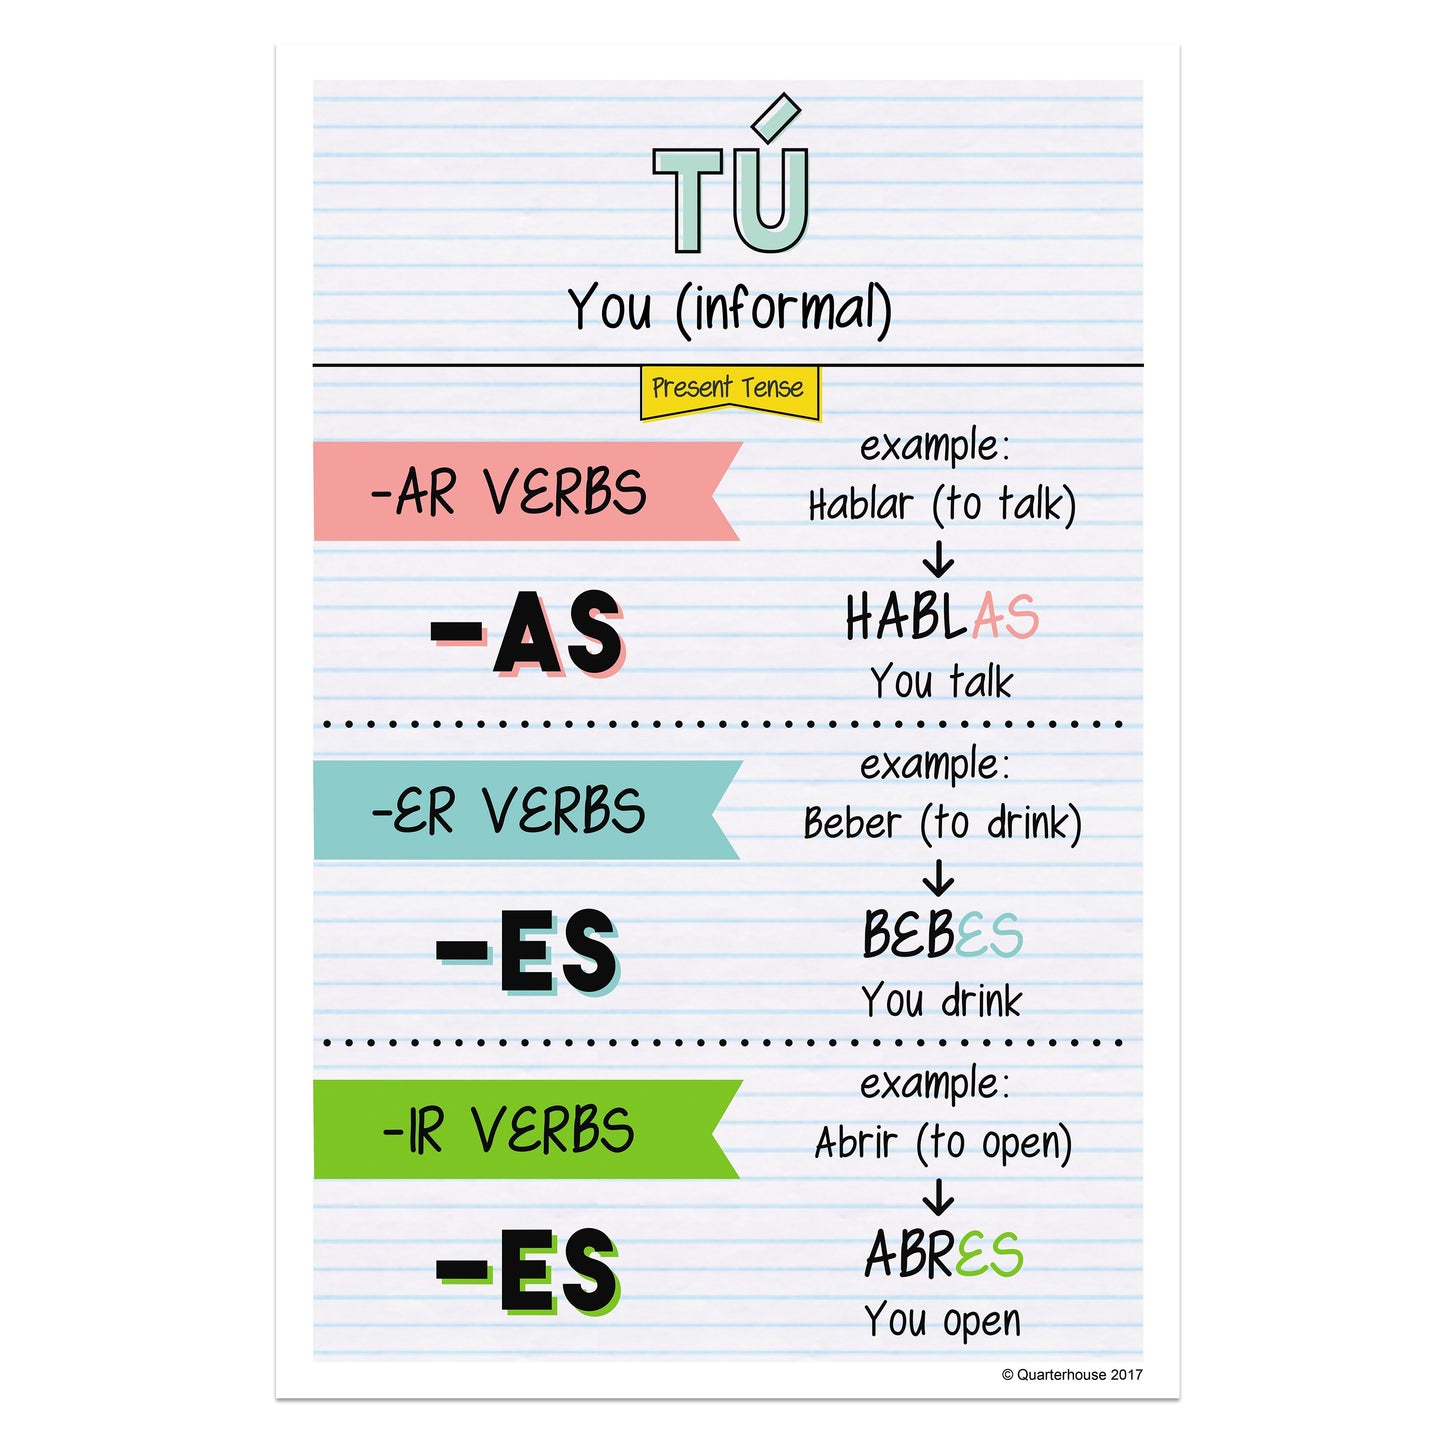 Quarterhouse Tú - Present Tense Spanish Verb Conjugation (Light-Themed) Poster, Spanish and ESL Classroom Materials for Teachers